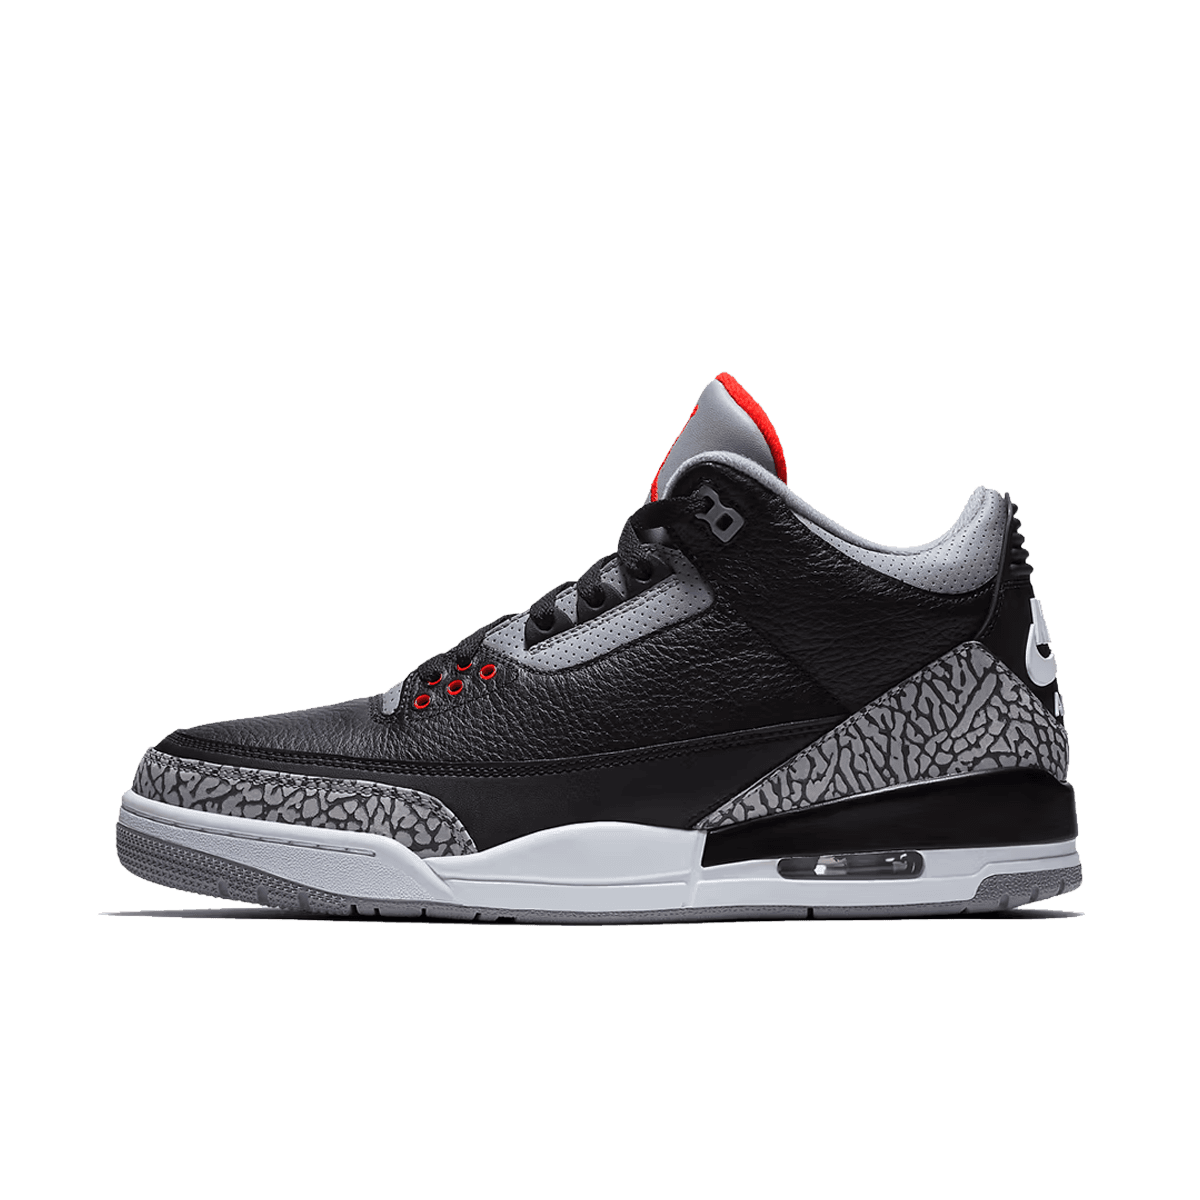 Air Jordan 3 Retro 'Black Cement'